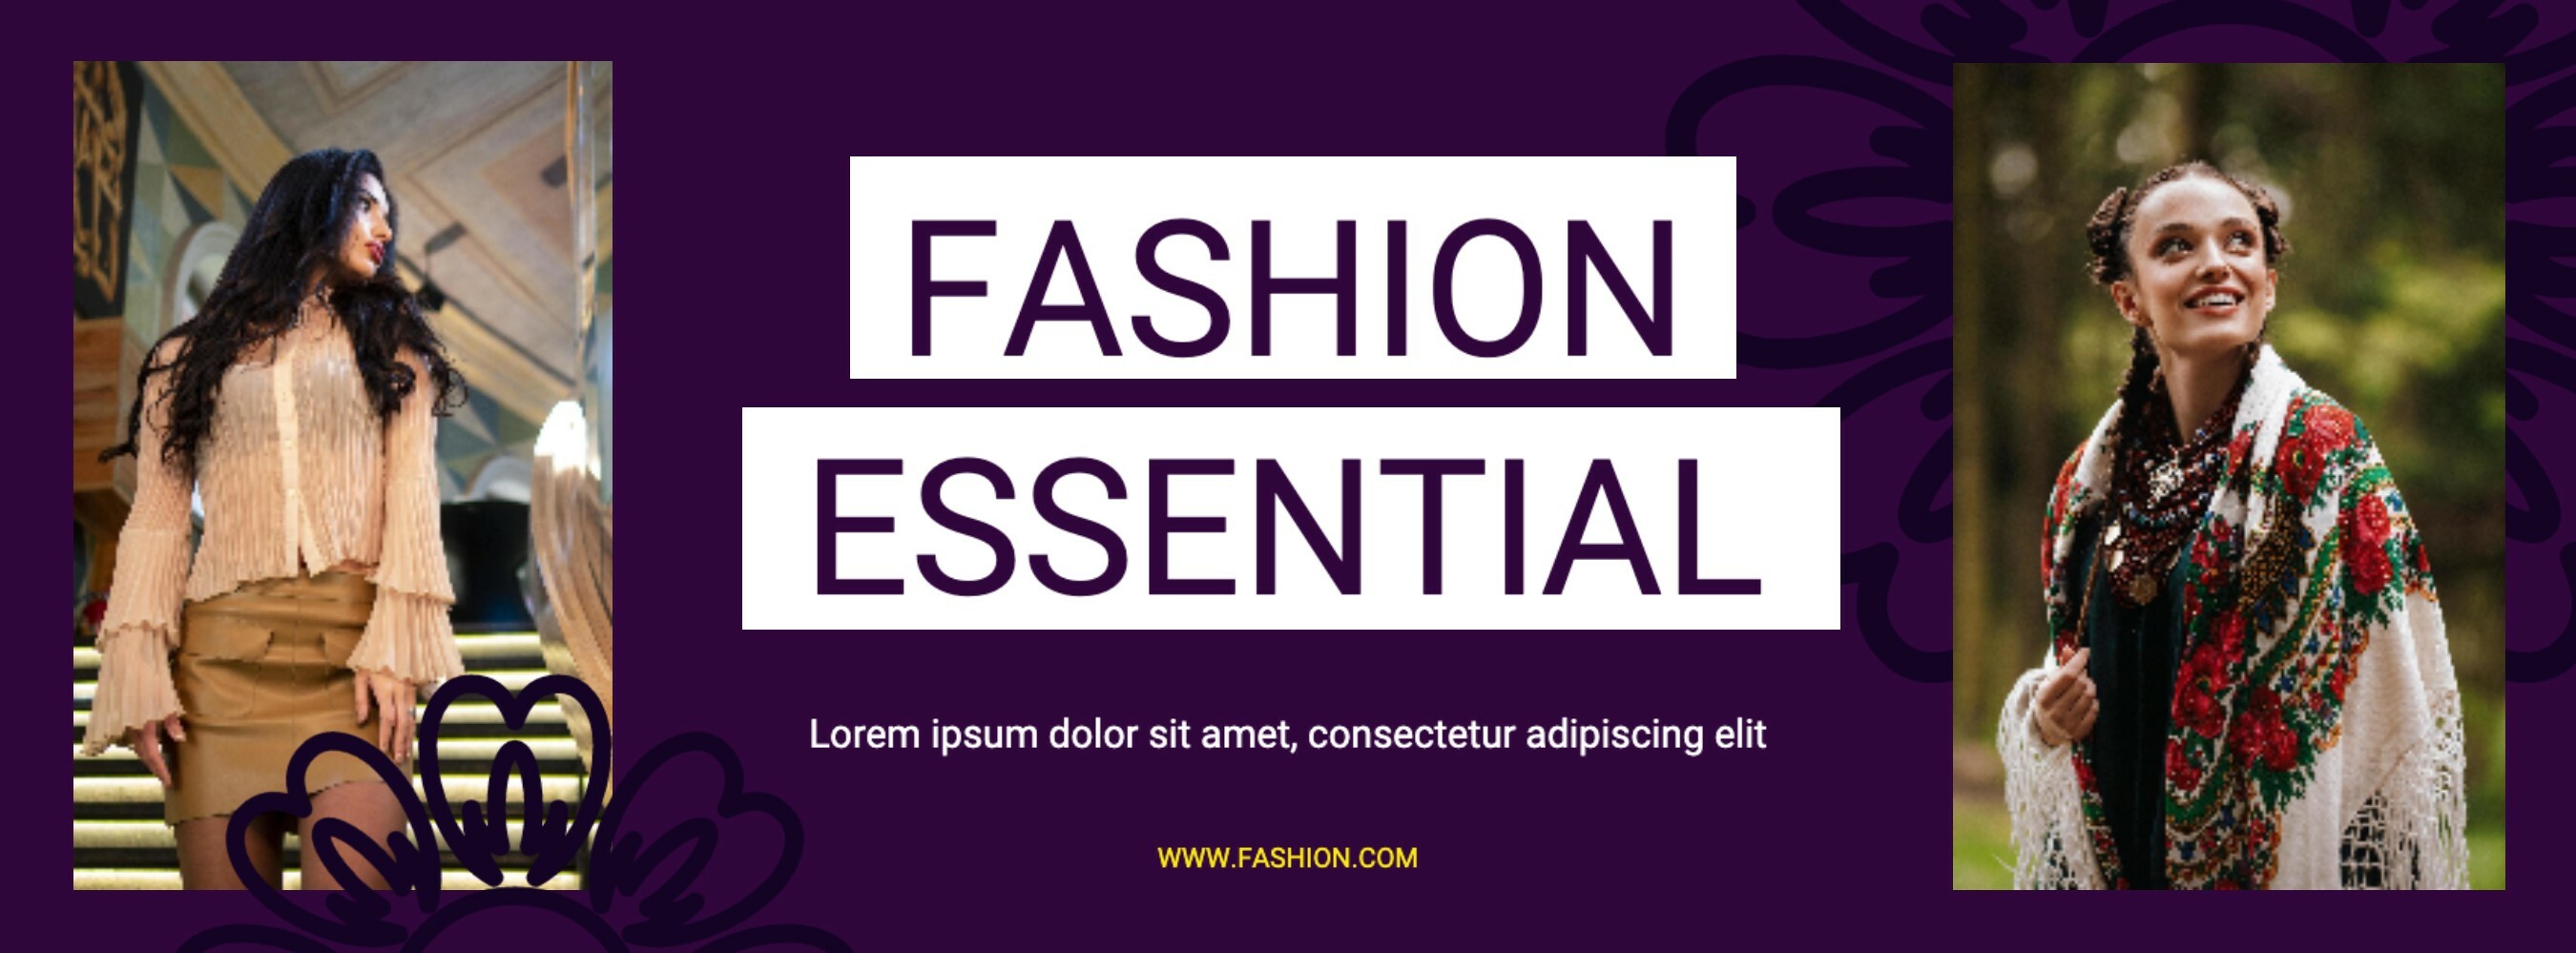 Fashion Essentials template